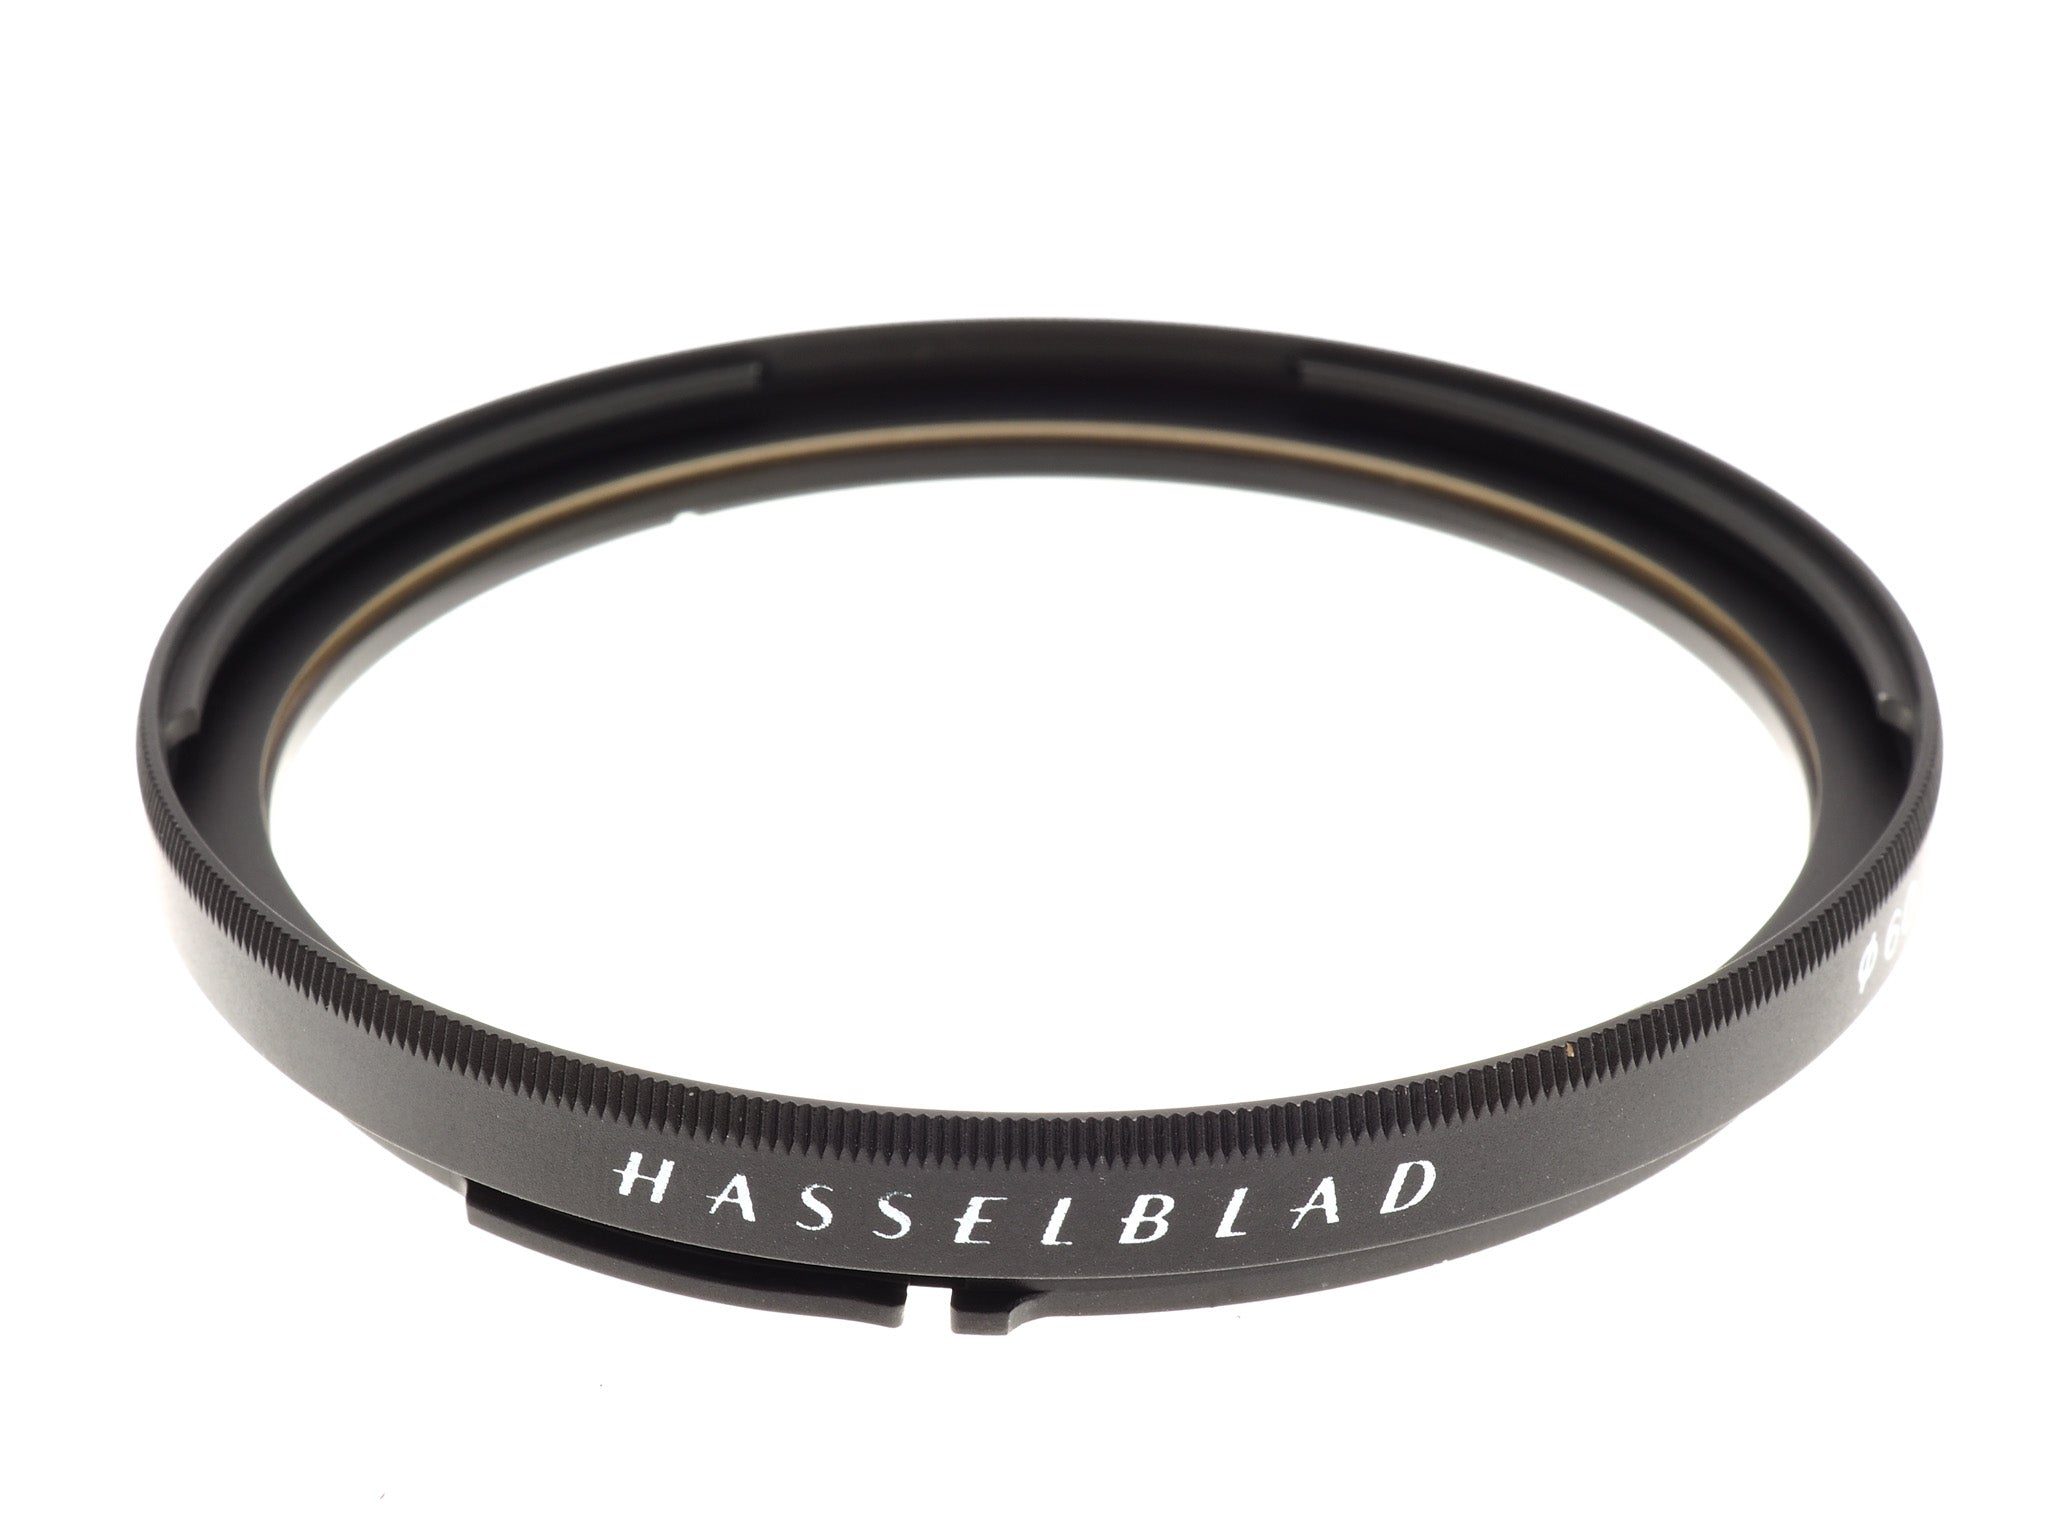 Hasselblad B60 UV Filter UV-SKY 1A (41608/51608/3051610) - Accessory